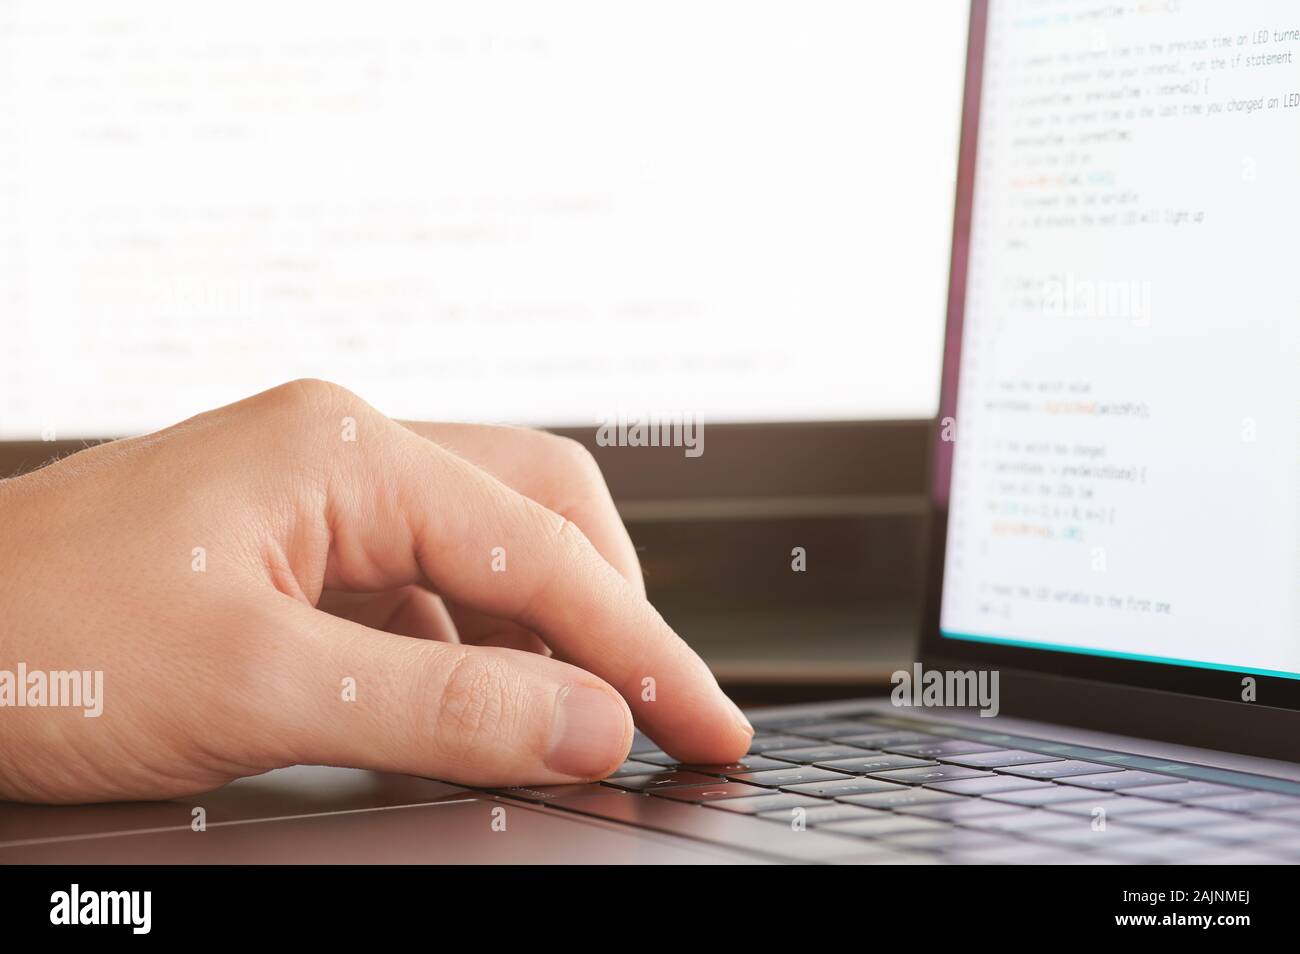 Coding application theme. Programmer man hand on laptop keyboard Stock Photo